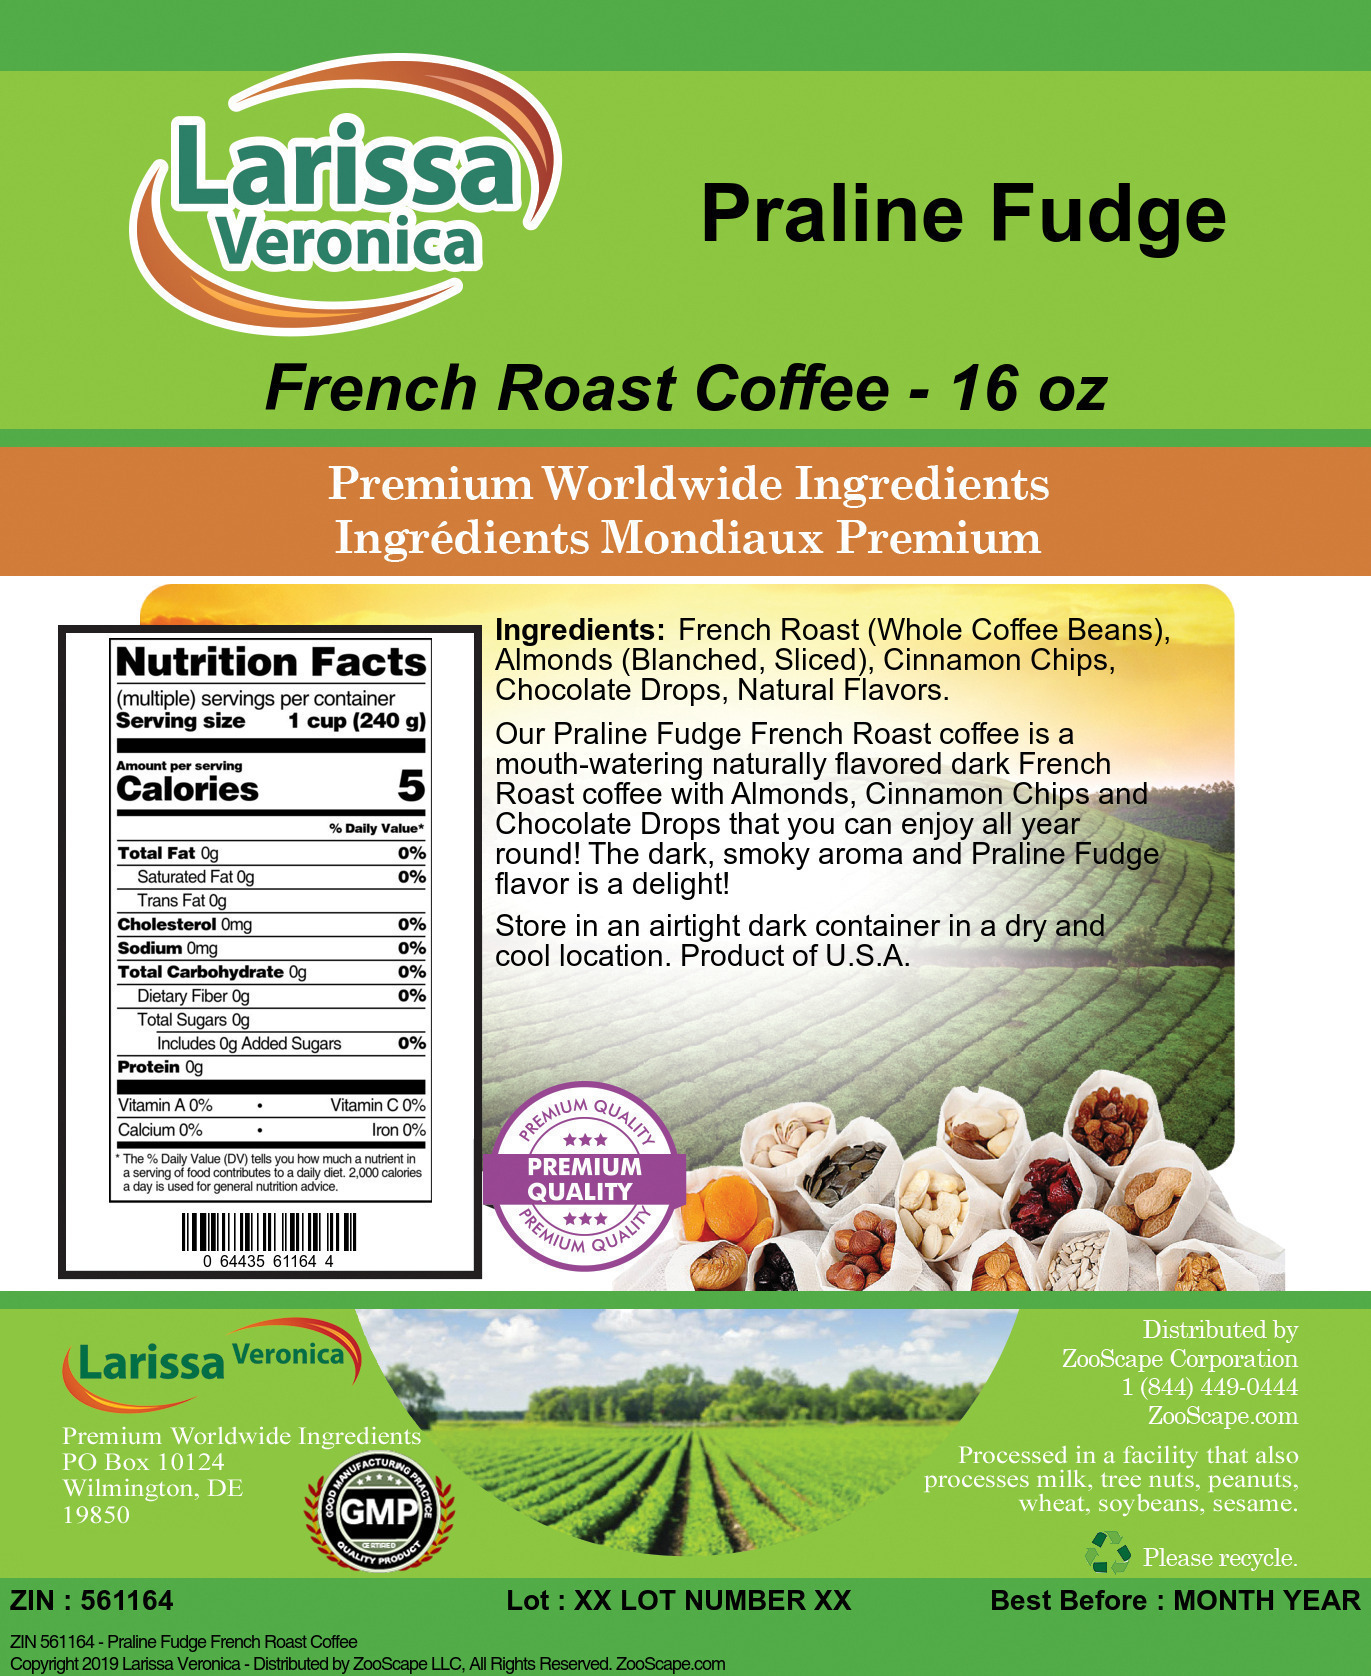 Praline Fudge French Roast Coffee - Label